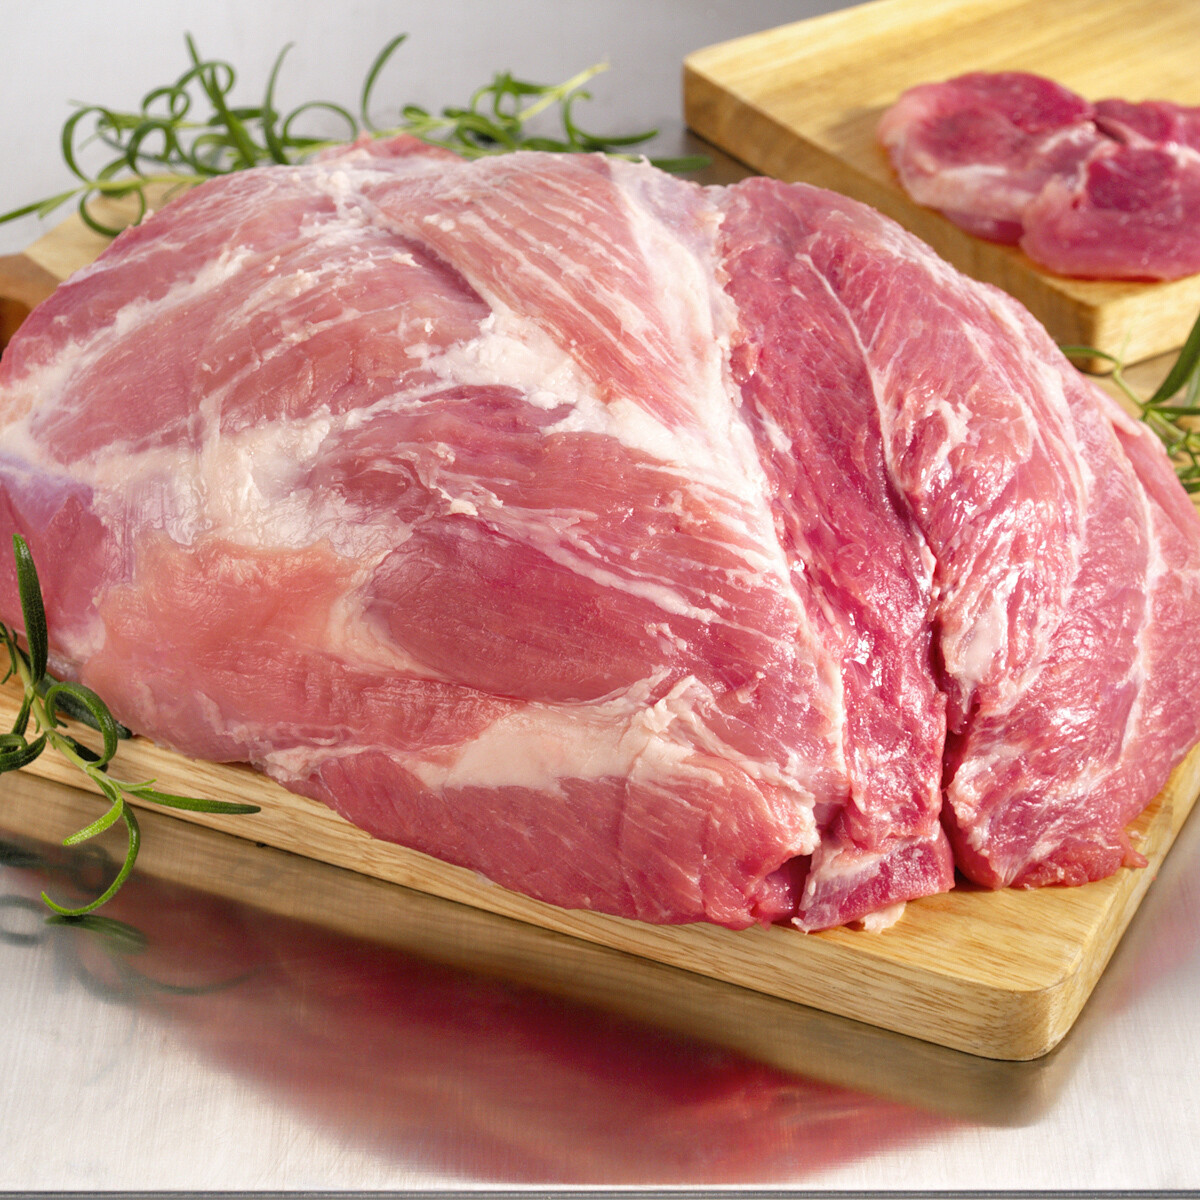 Berkshire Pork Ham Trim 2.9-3.25lbs 黑毛猪猪腿肉 原价 $9.99，現特價 $6.99/磅 送致美斋广州腐乳一瓶！！